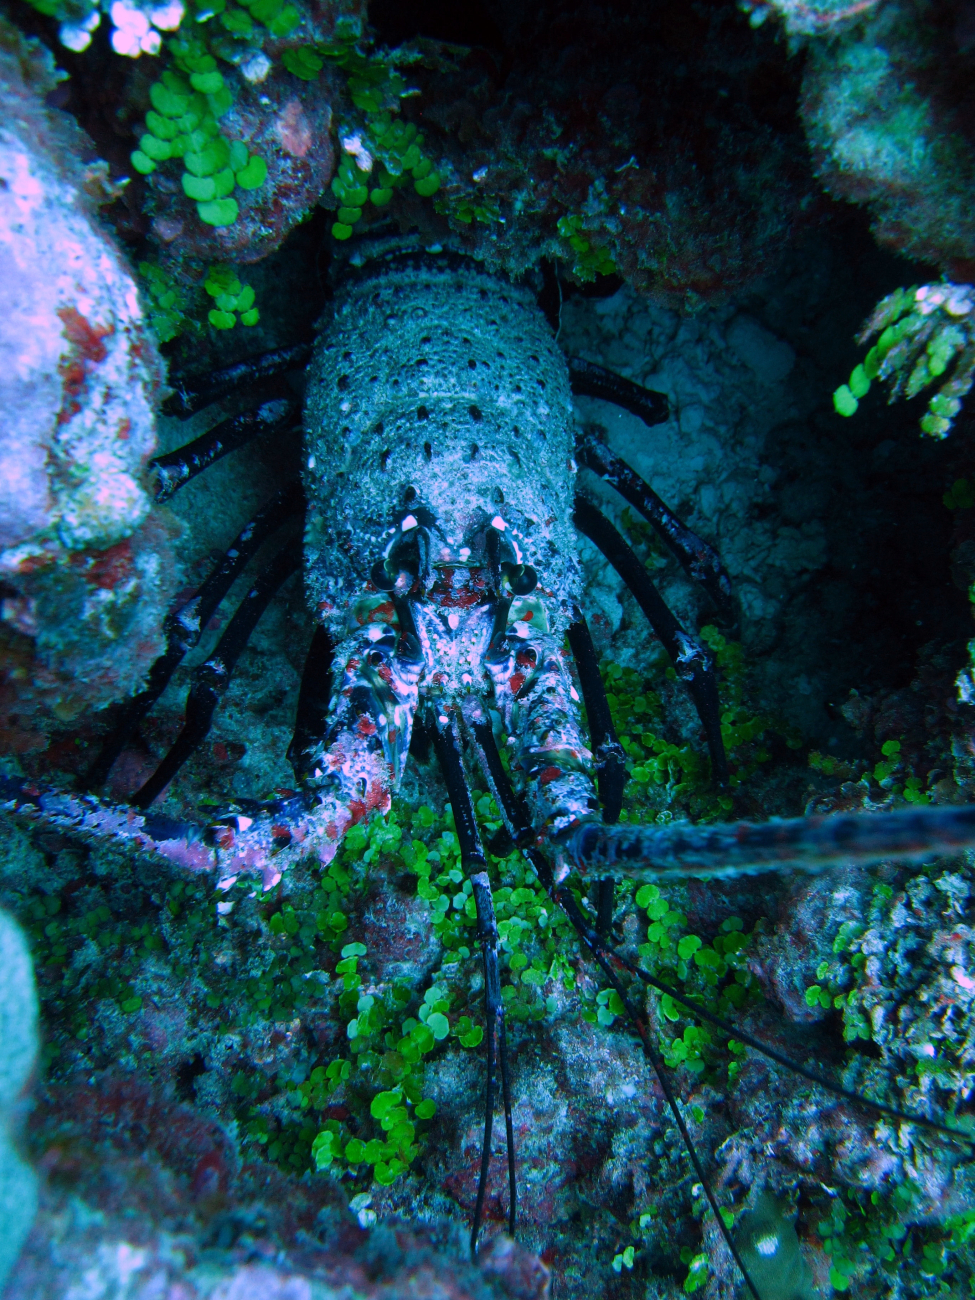 Palinurid spiny lobster